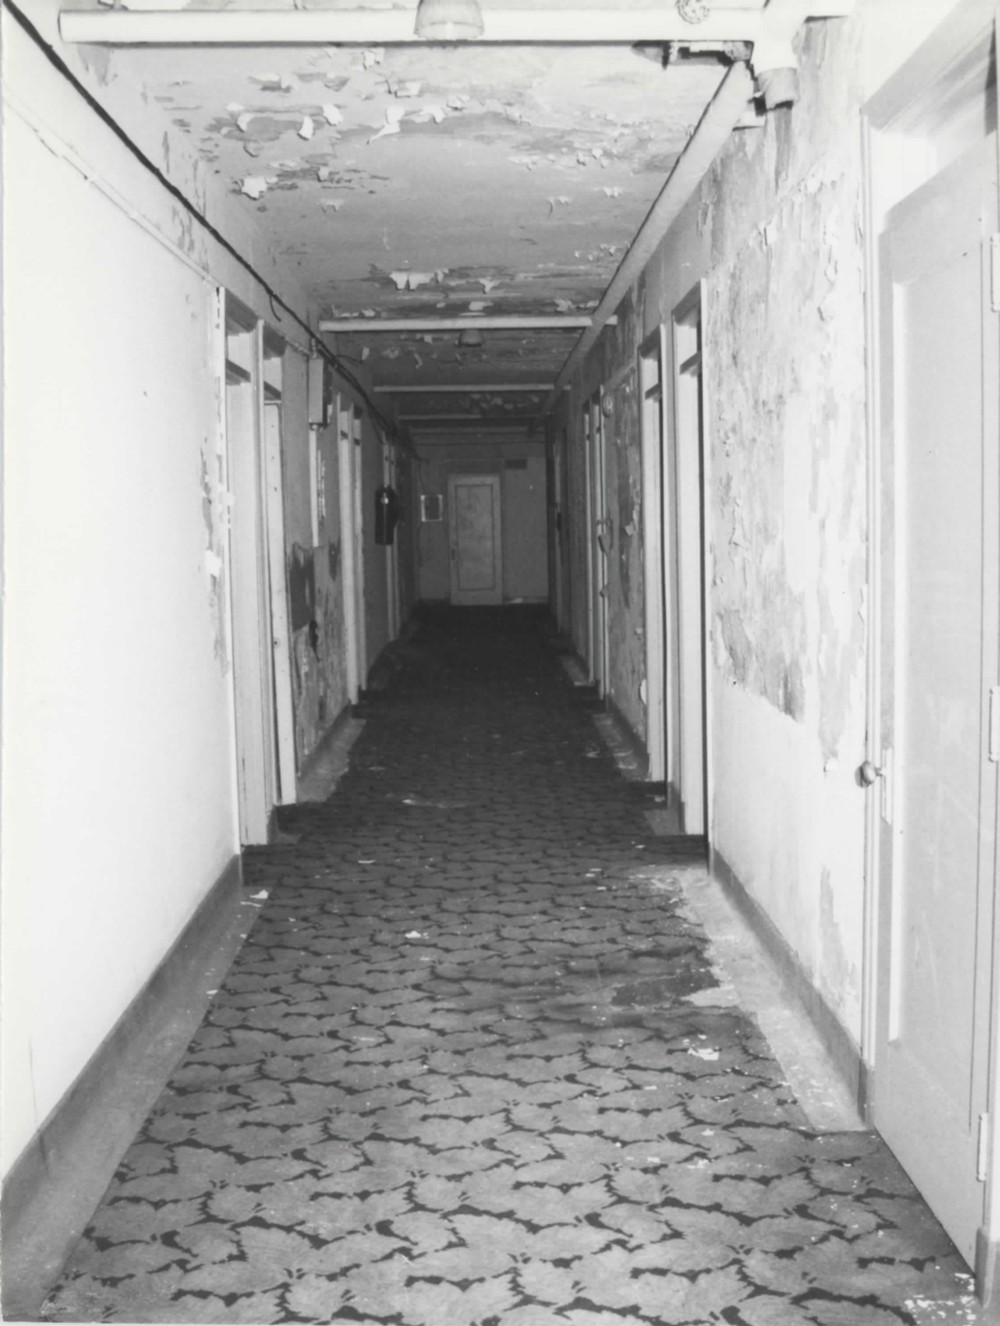 Marting Hotel, Ironton Ohio Sixth-floor main corridor - looking south (1998)